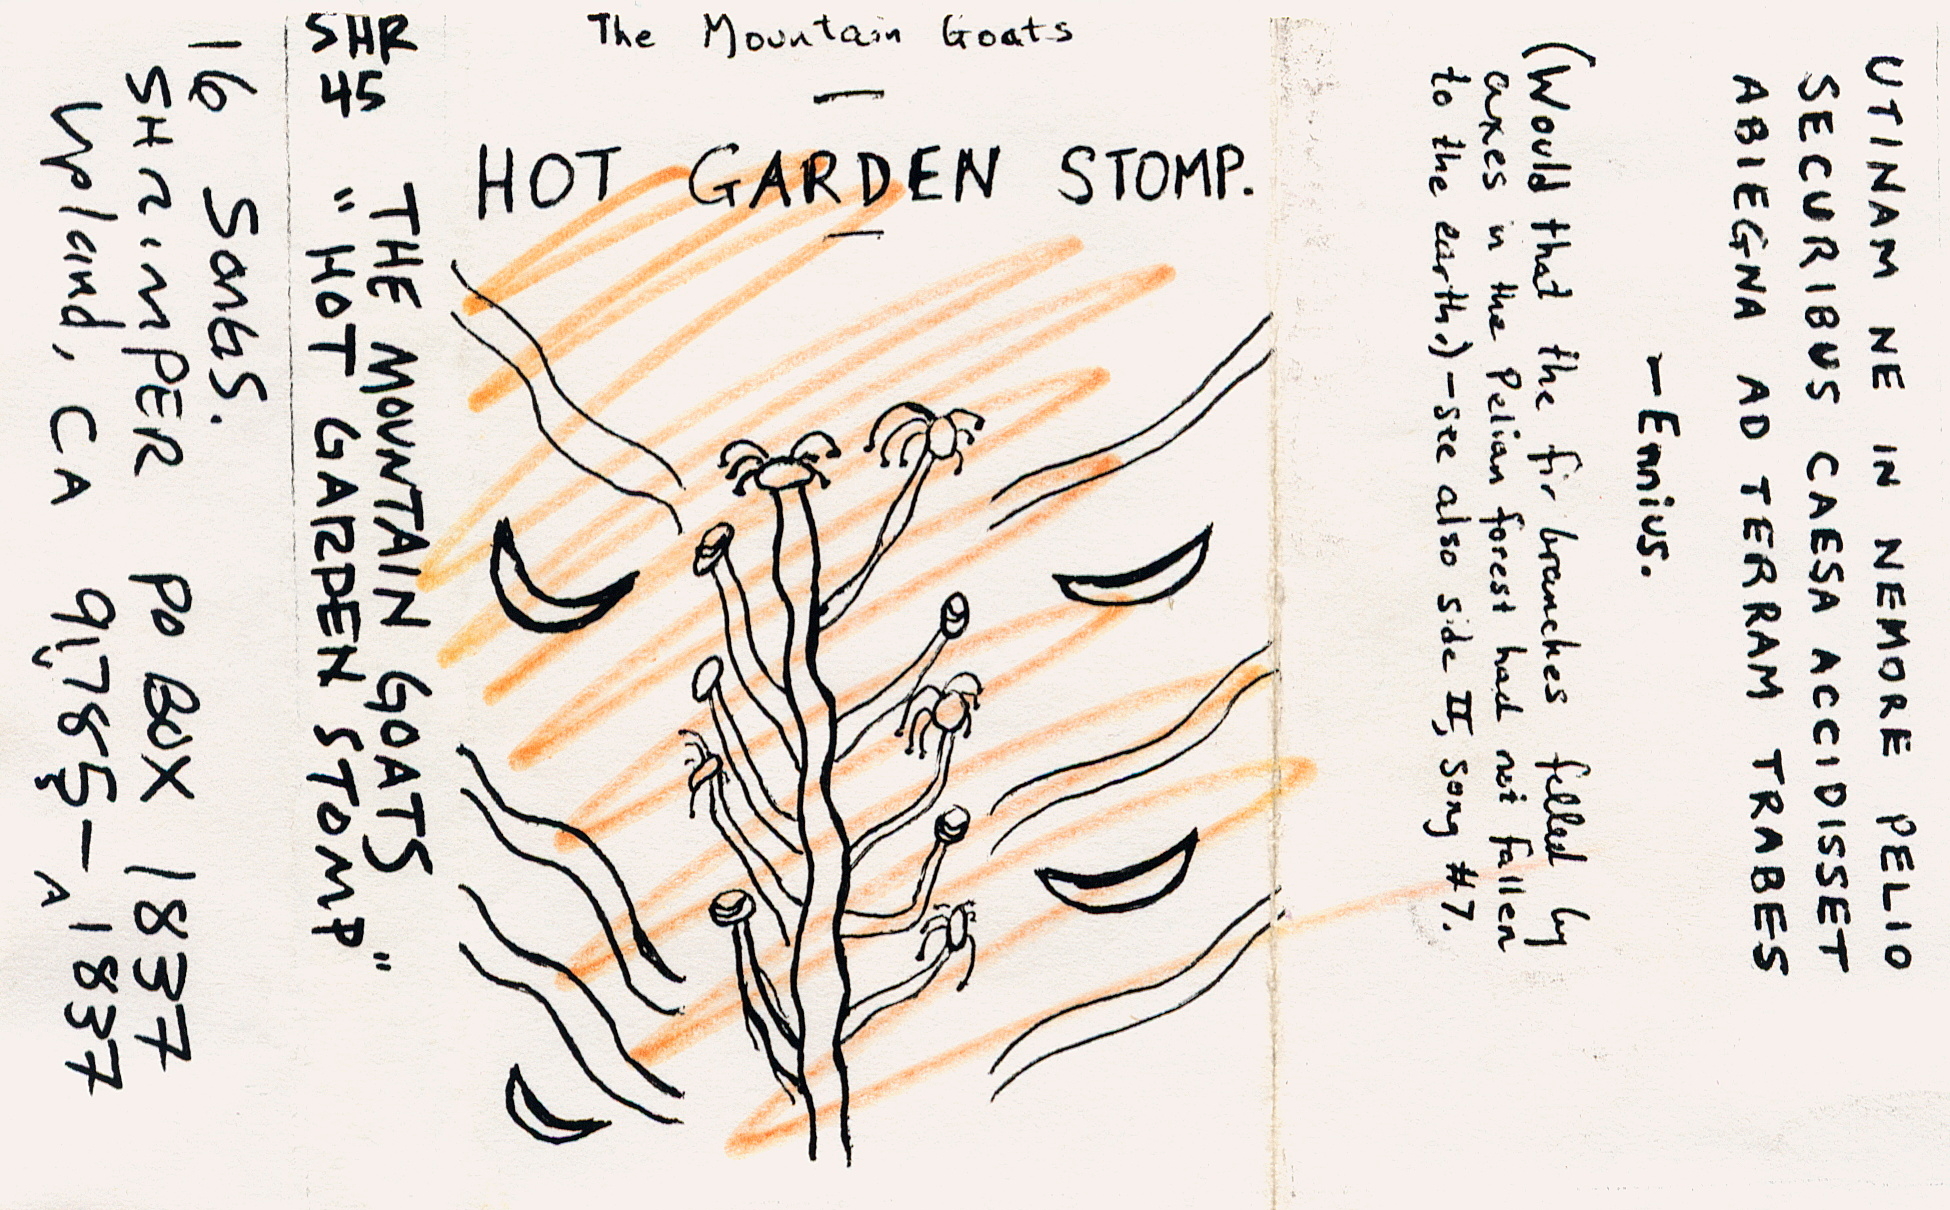 Cover of Hot Garden Stomp